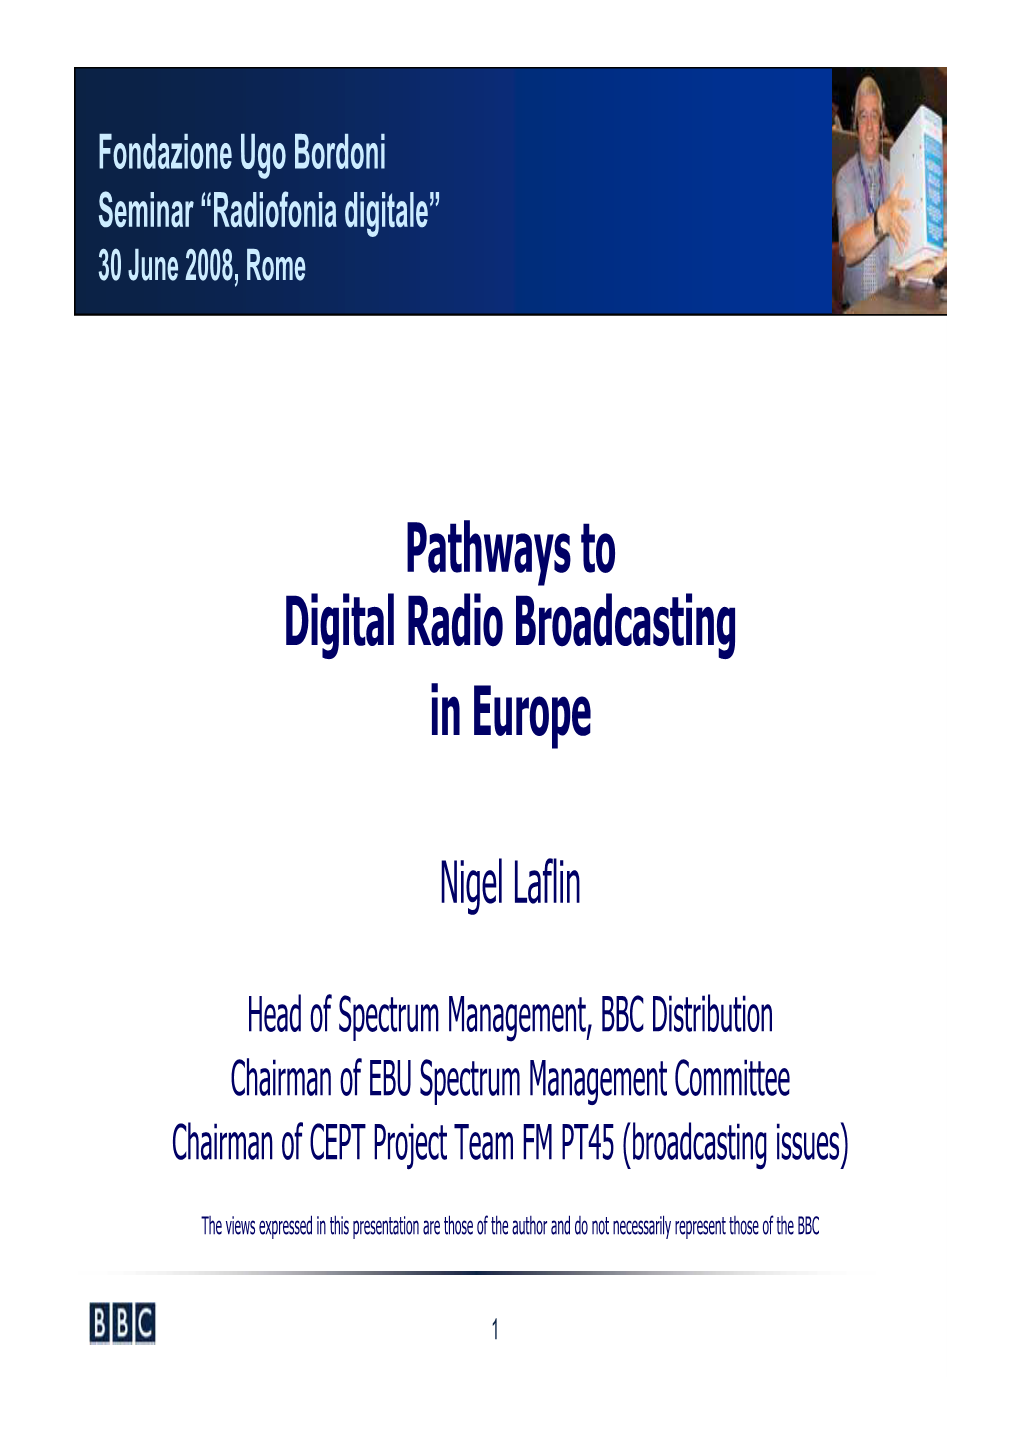 Pathways to Digital Radio Broadcasting in Europe